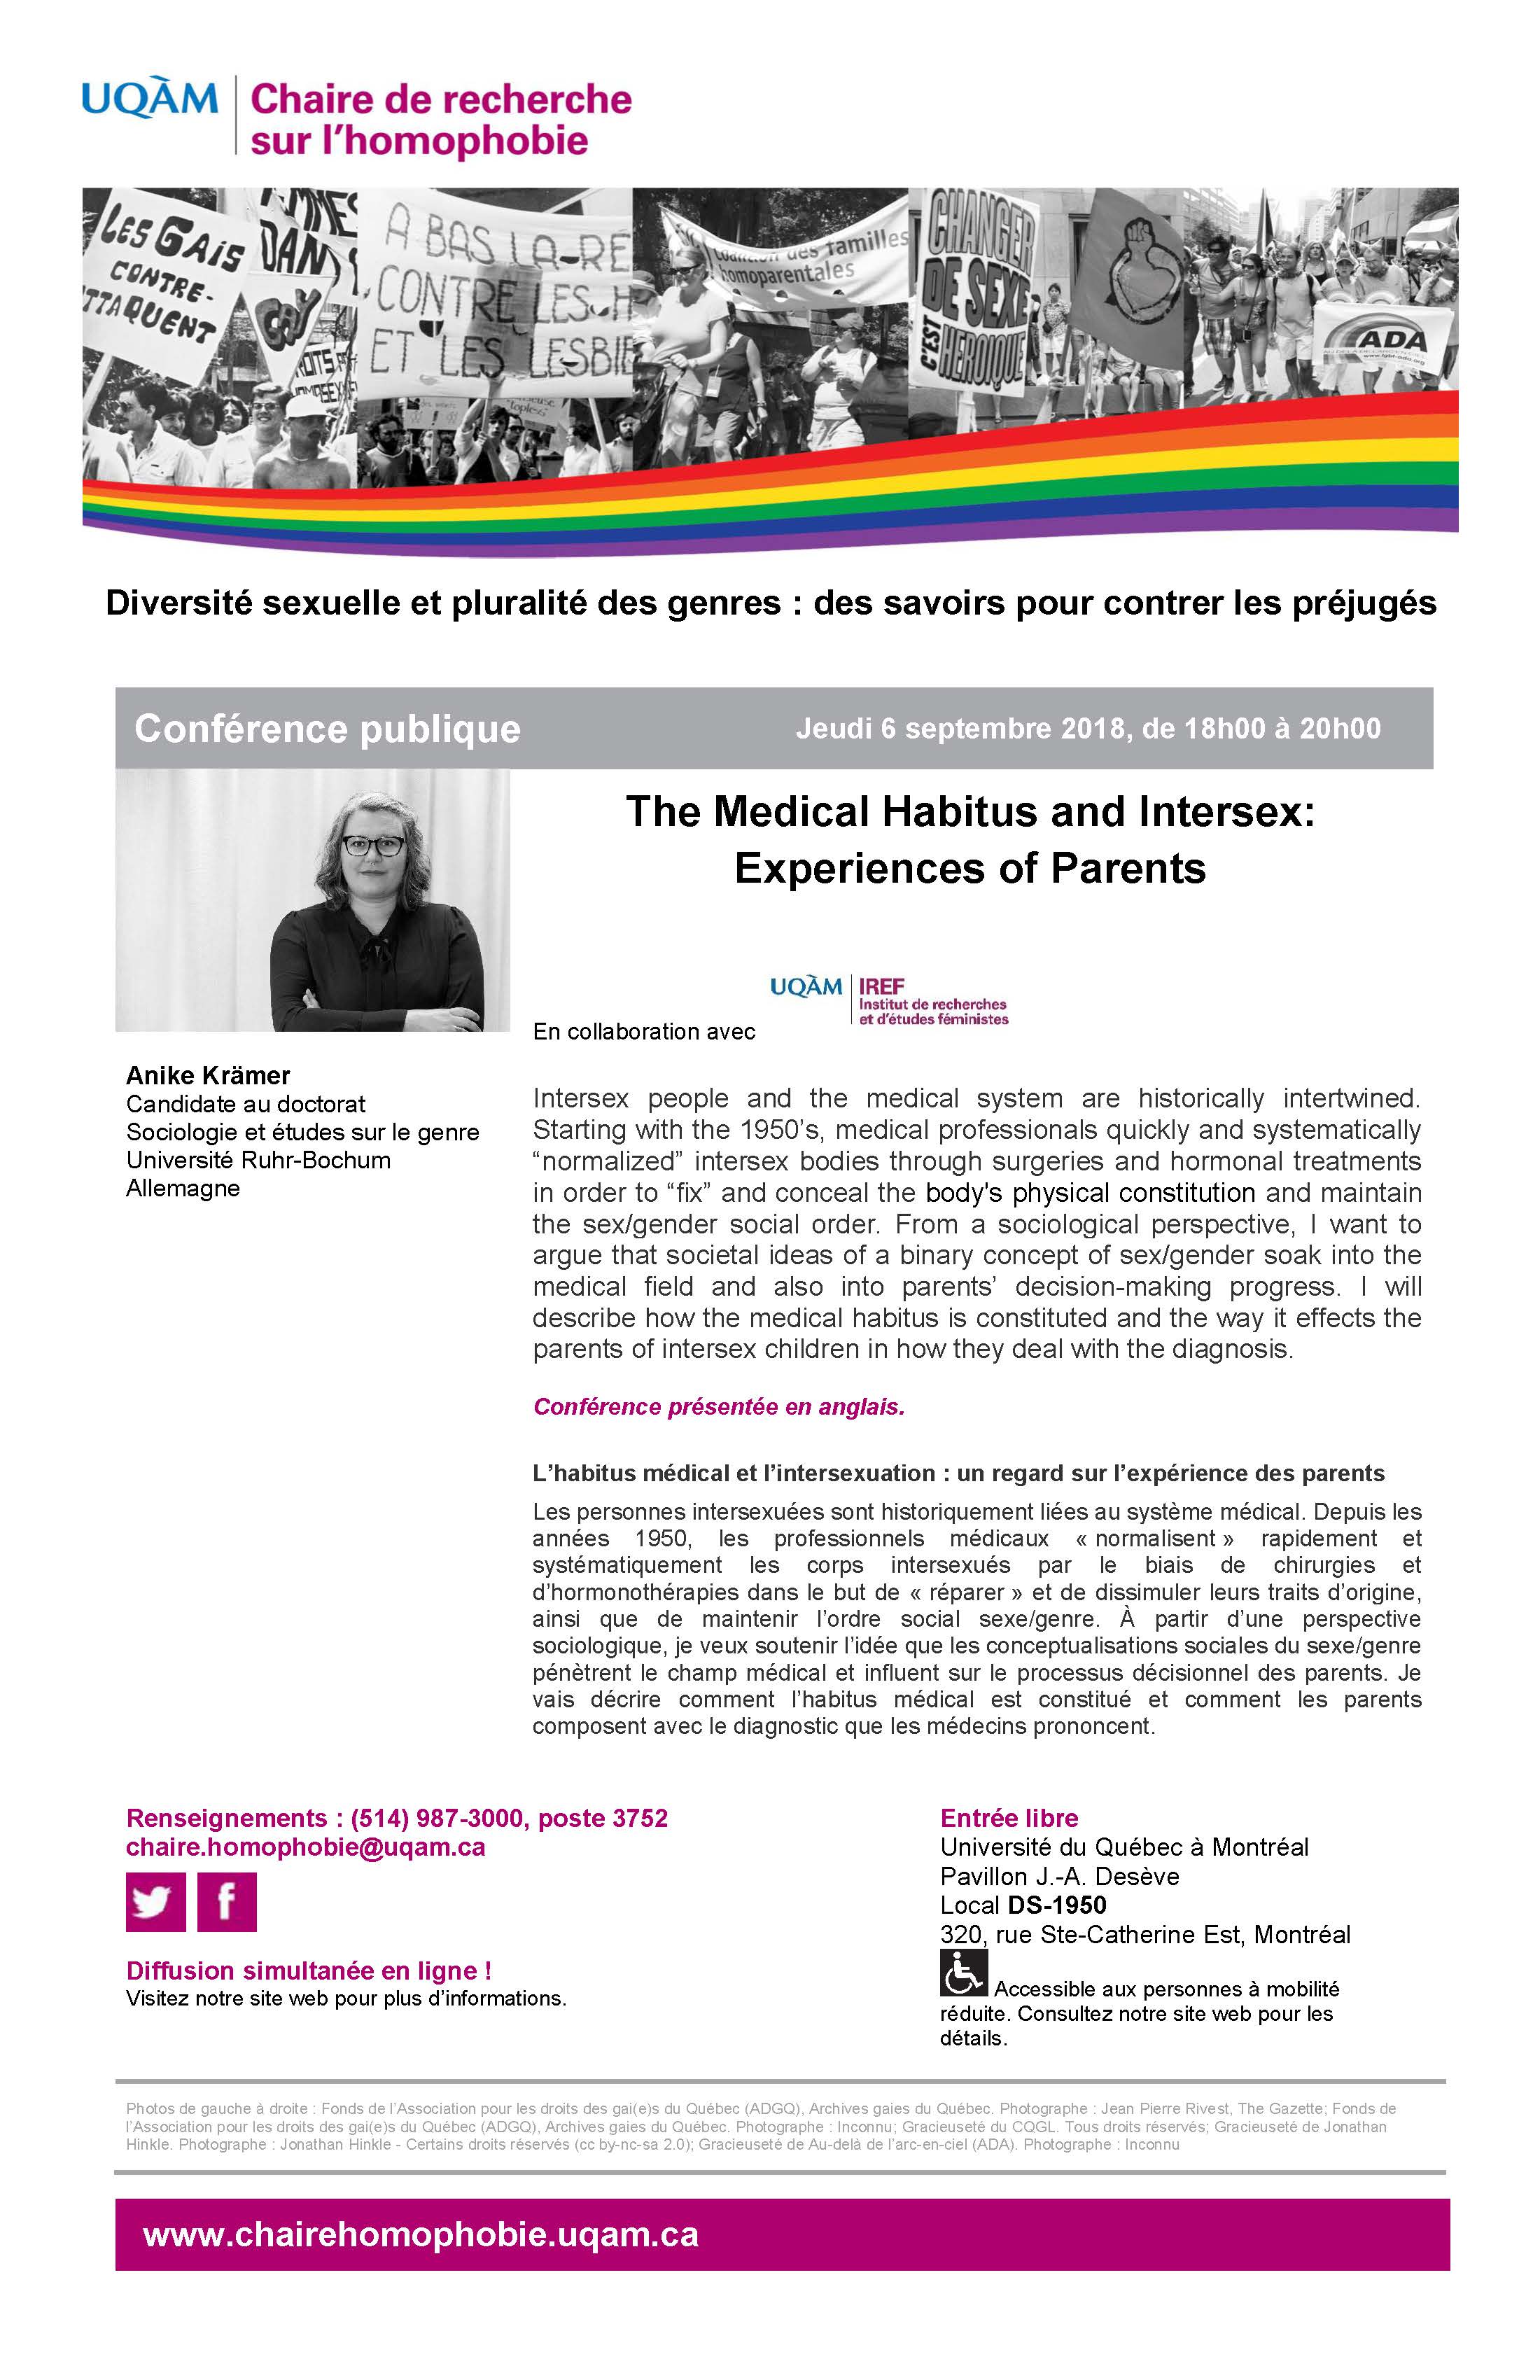 CONFÉRENCE PUBLIQUE | ''The Medical Habitus and Intersex: Experiences of Parents''